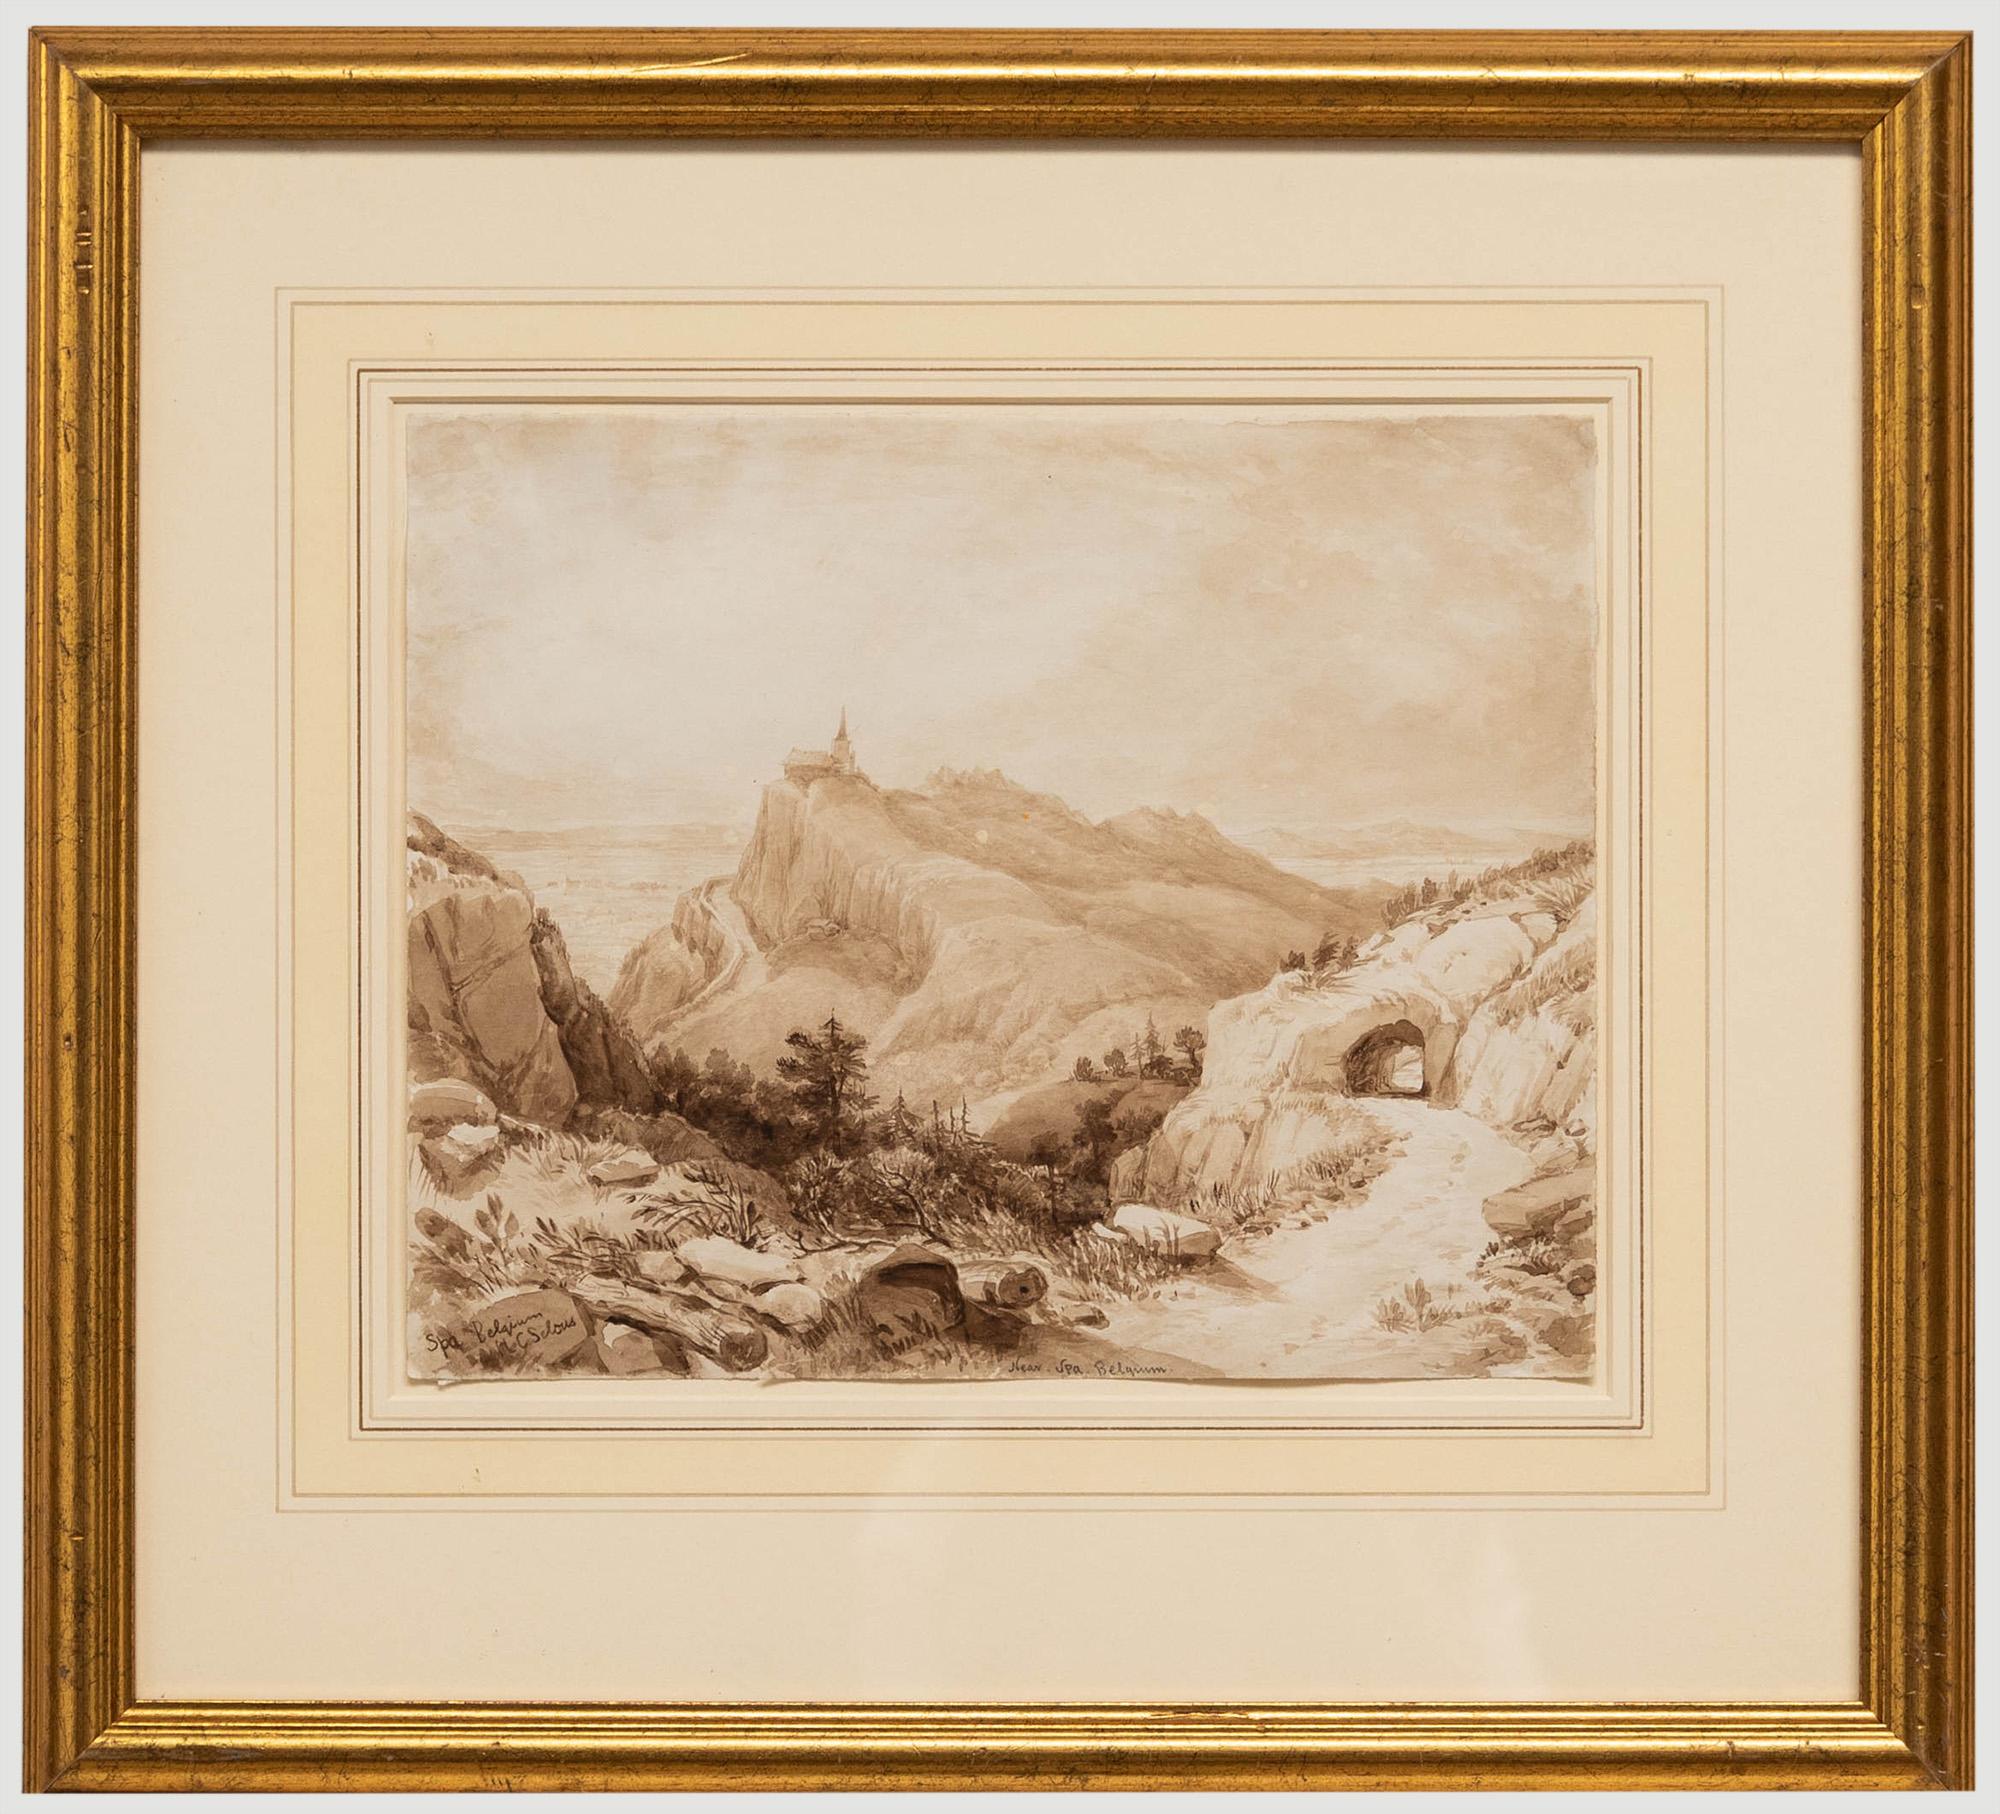 Unknown Landscape Art - Henry C. Selous (1803-1890) - Framed Watercolour, Landscape Near Spa Belgium